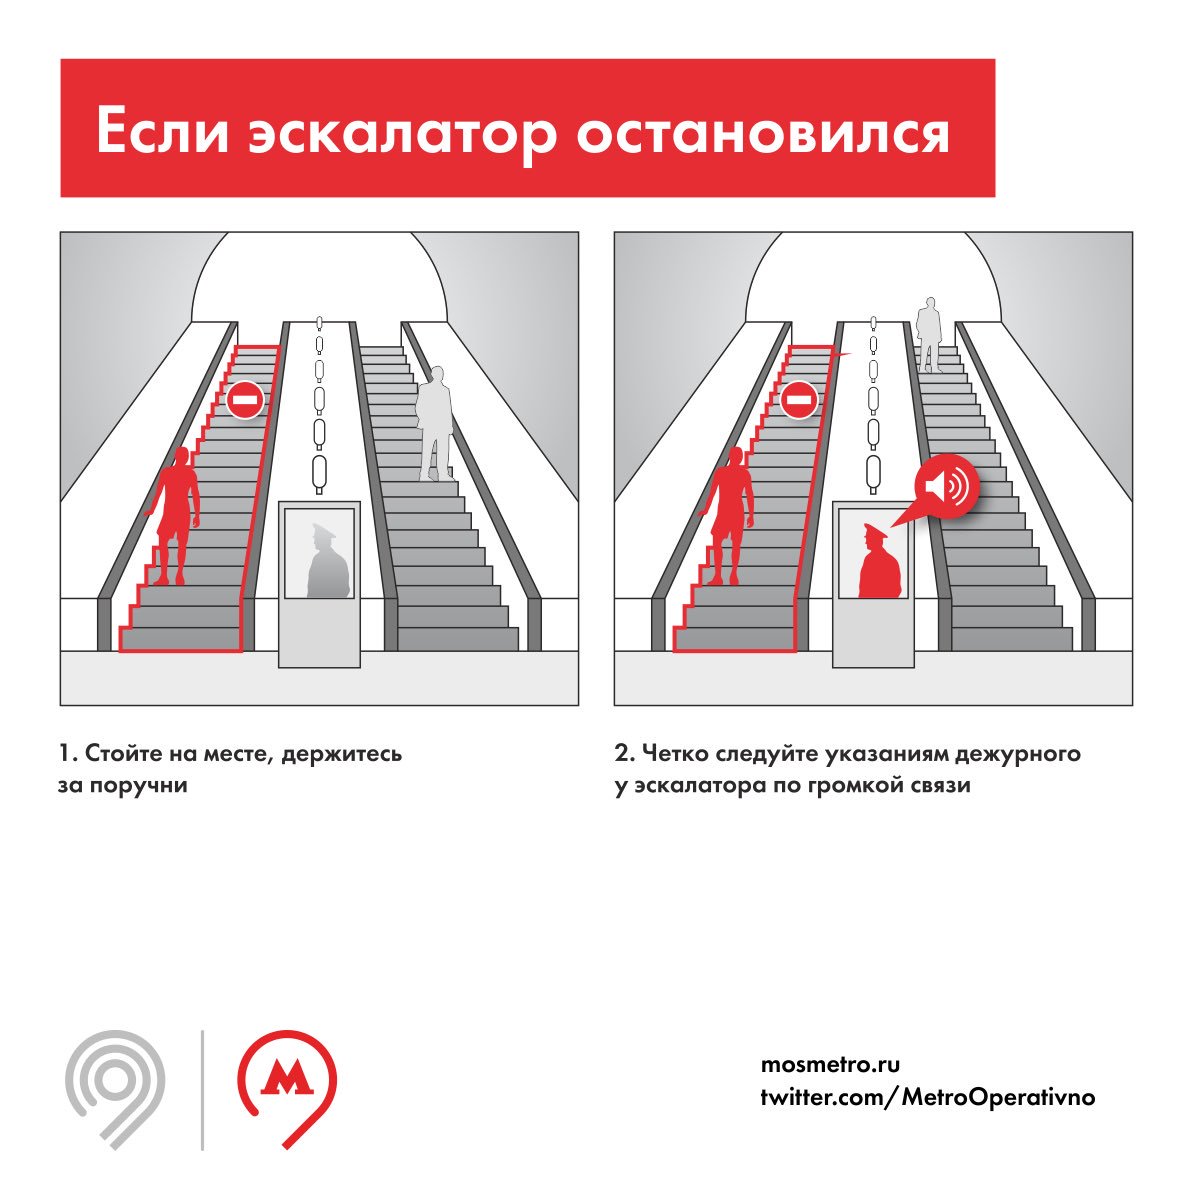 Правила безопасности на эскалаторе. Правила поведения в метрополитене на эскалаторе. Безопасность на эскалаторе в метро. Безопасность в метрополитене. Правила на эскалаторе.